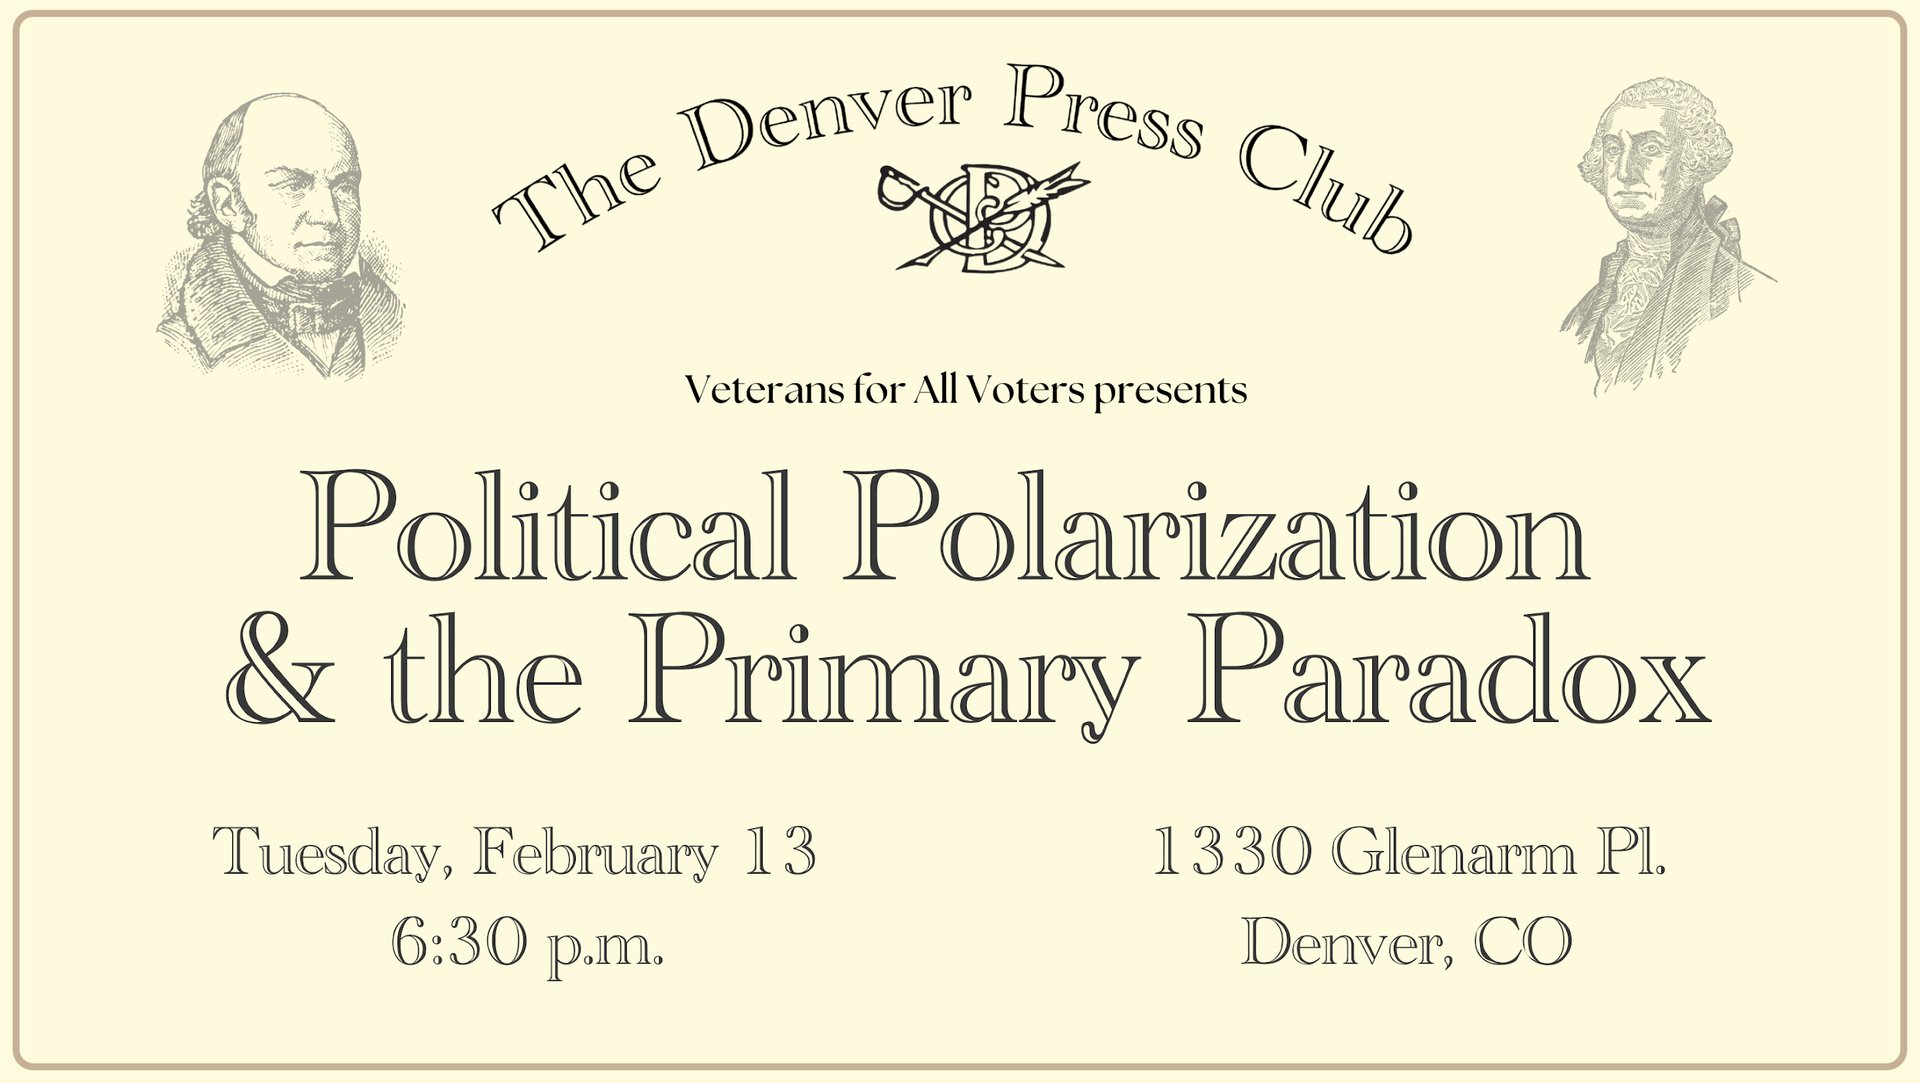  The Denver Press Club presents a panel: Political Polarization & The Primary Paradox